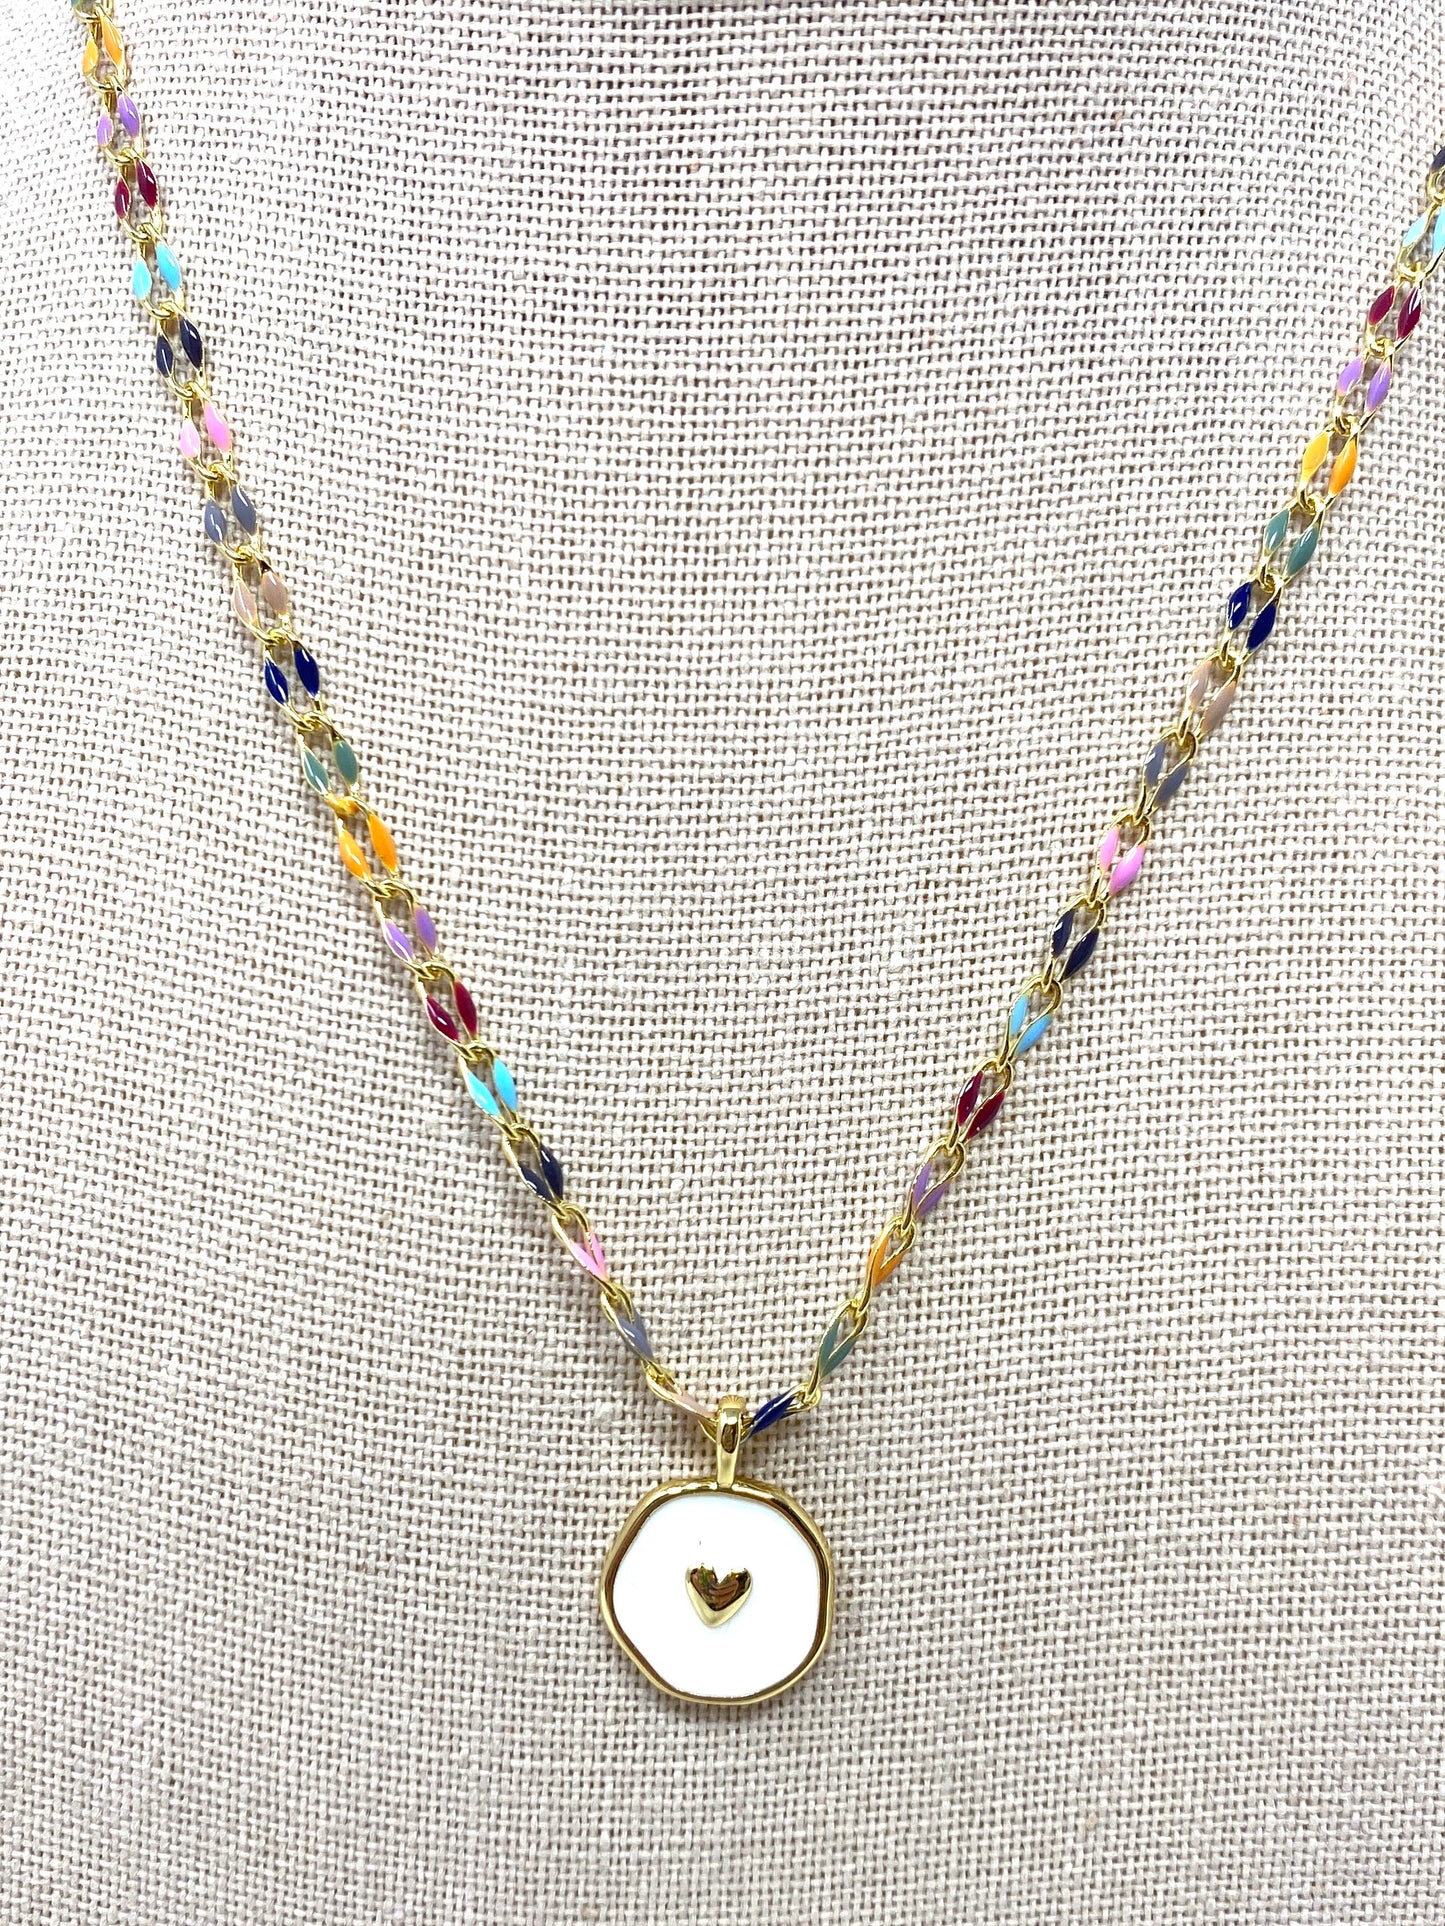 Eras Inspired Enamel Chain Necklace With White Enamel Heart Pendant